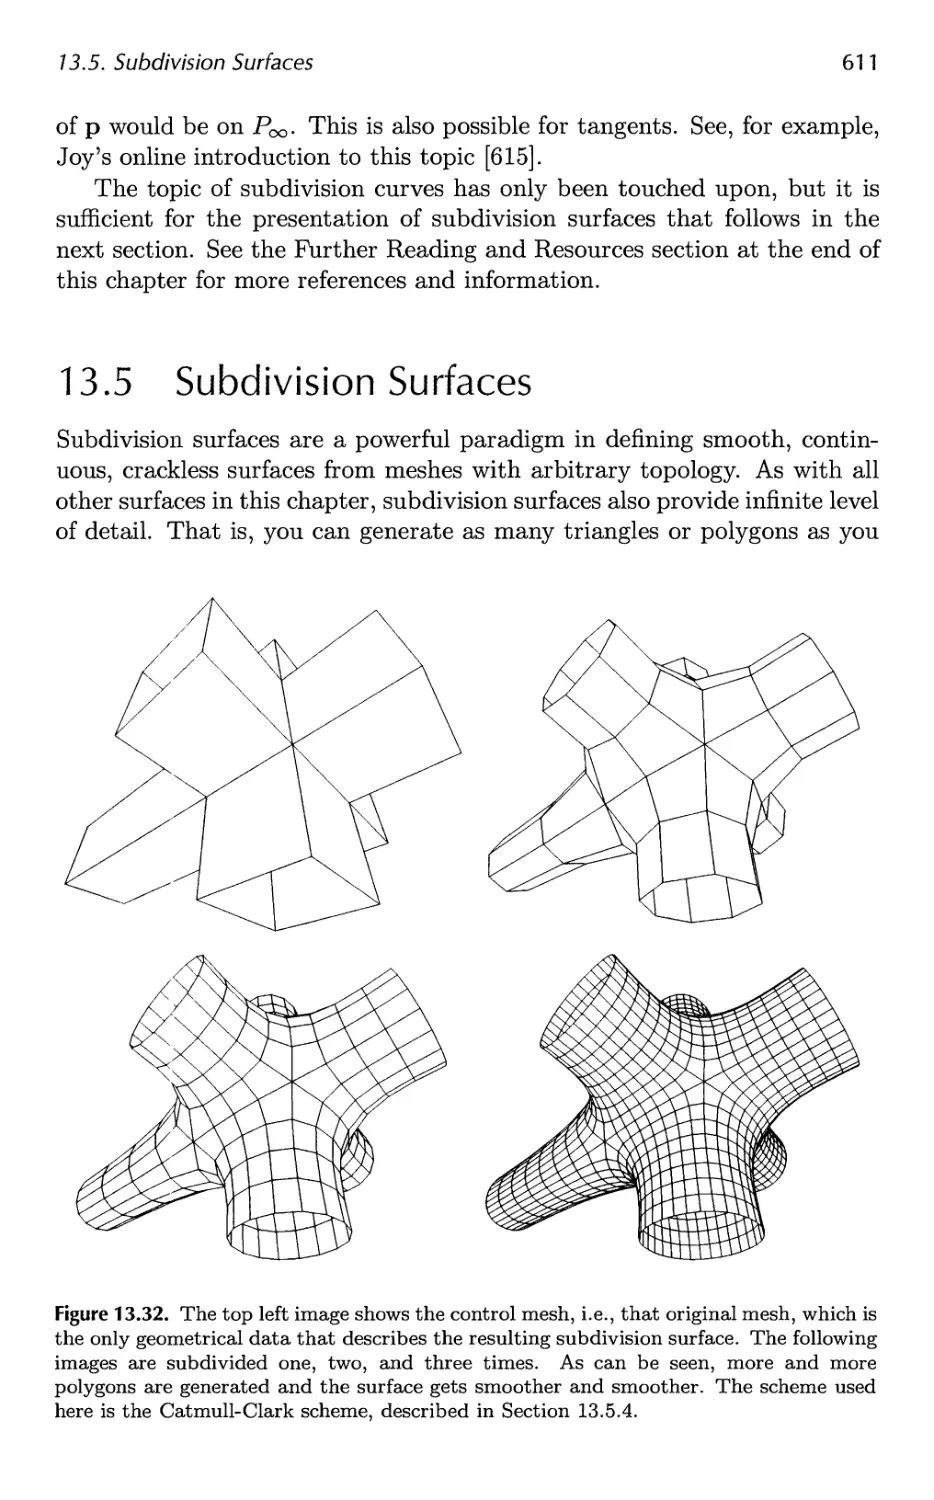 13.5 Subdivision Surfaces